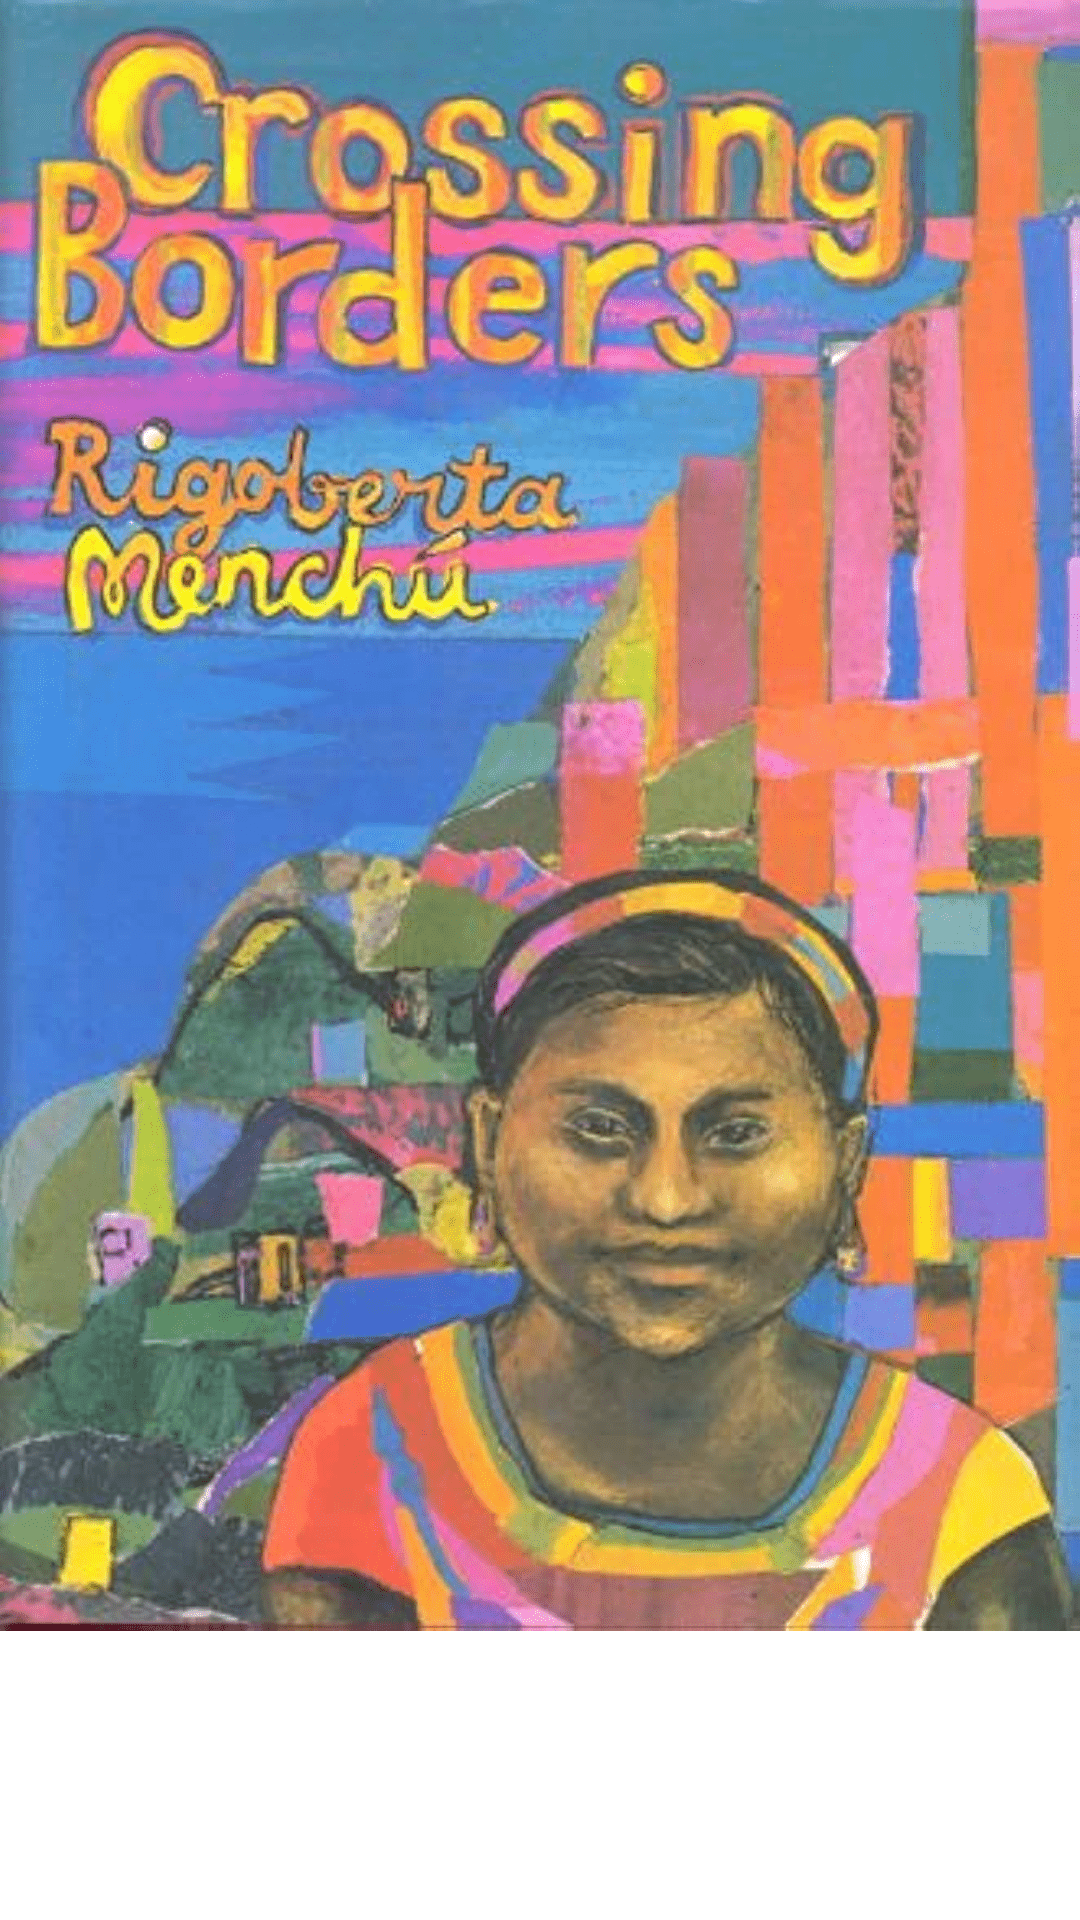 Crossing Borders by Rigoberta Menchu